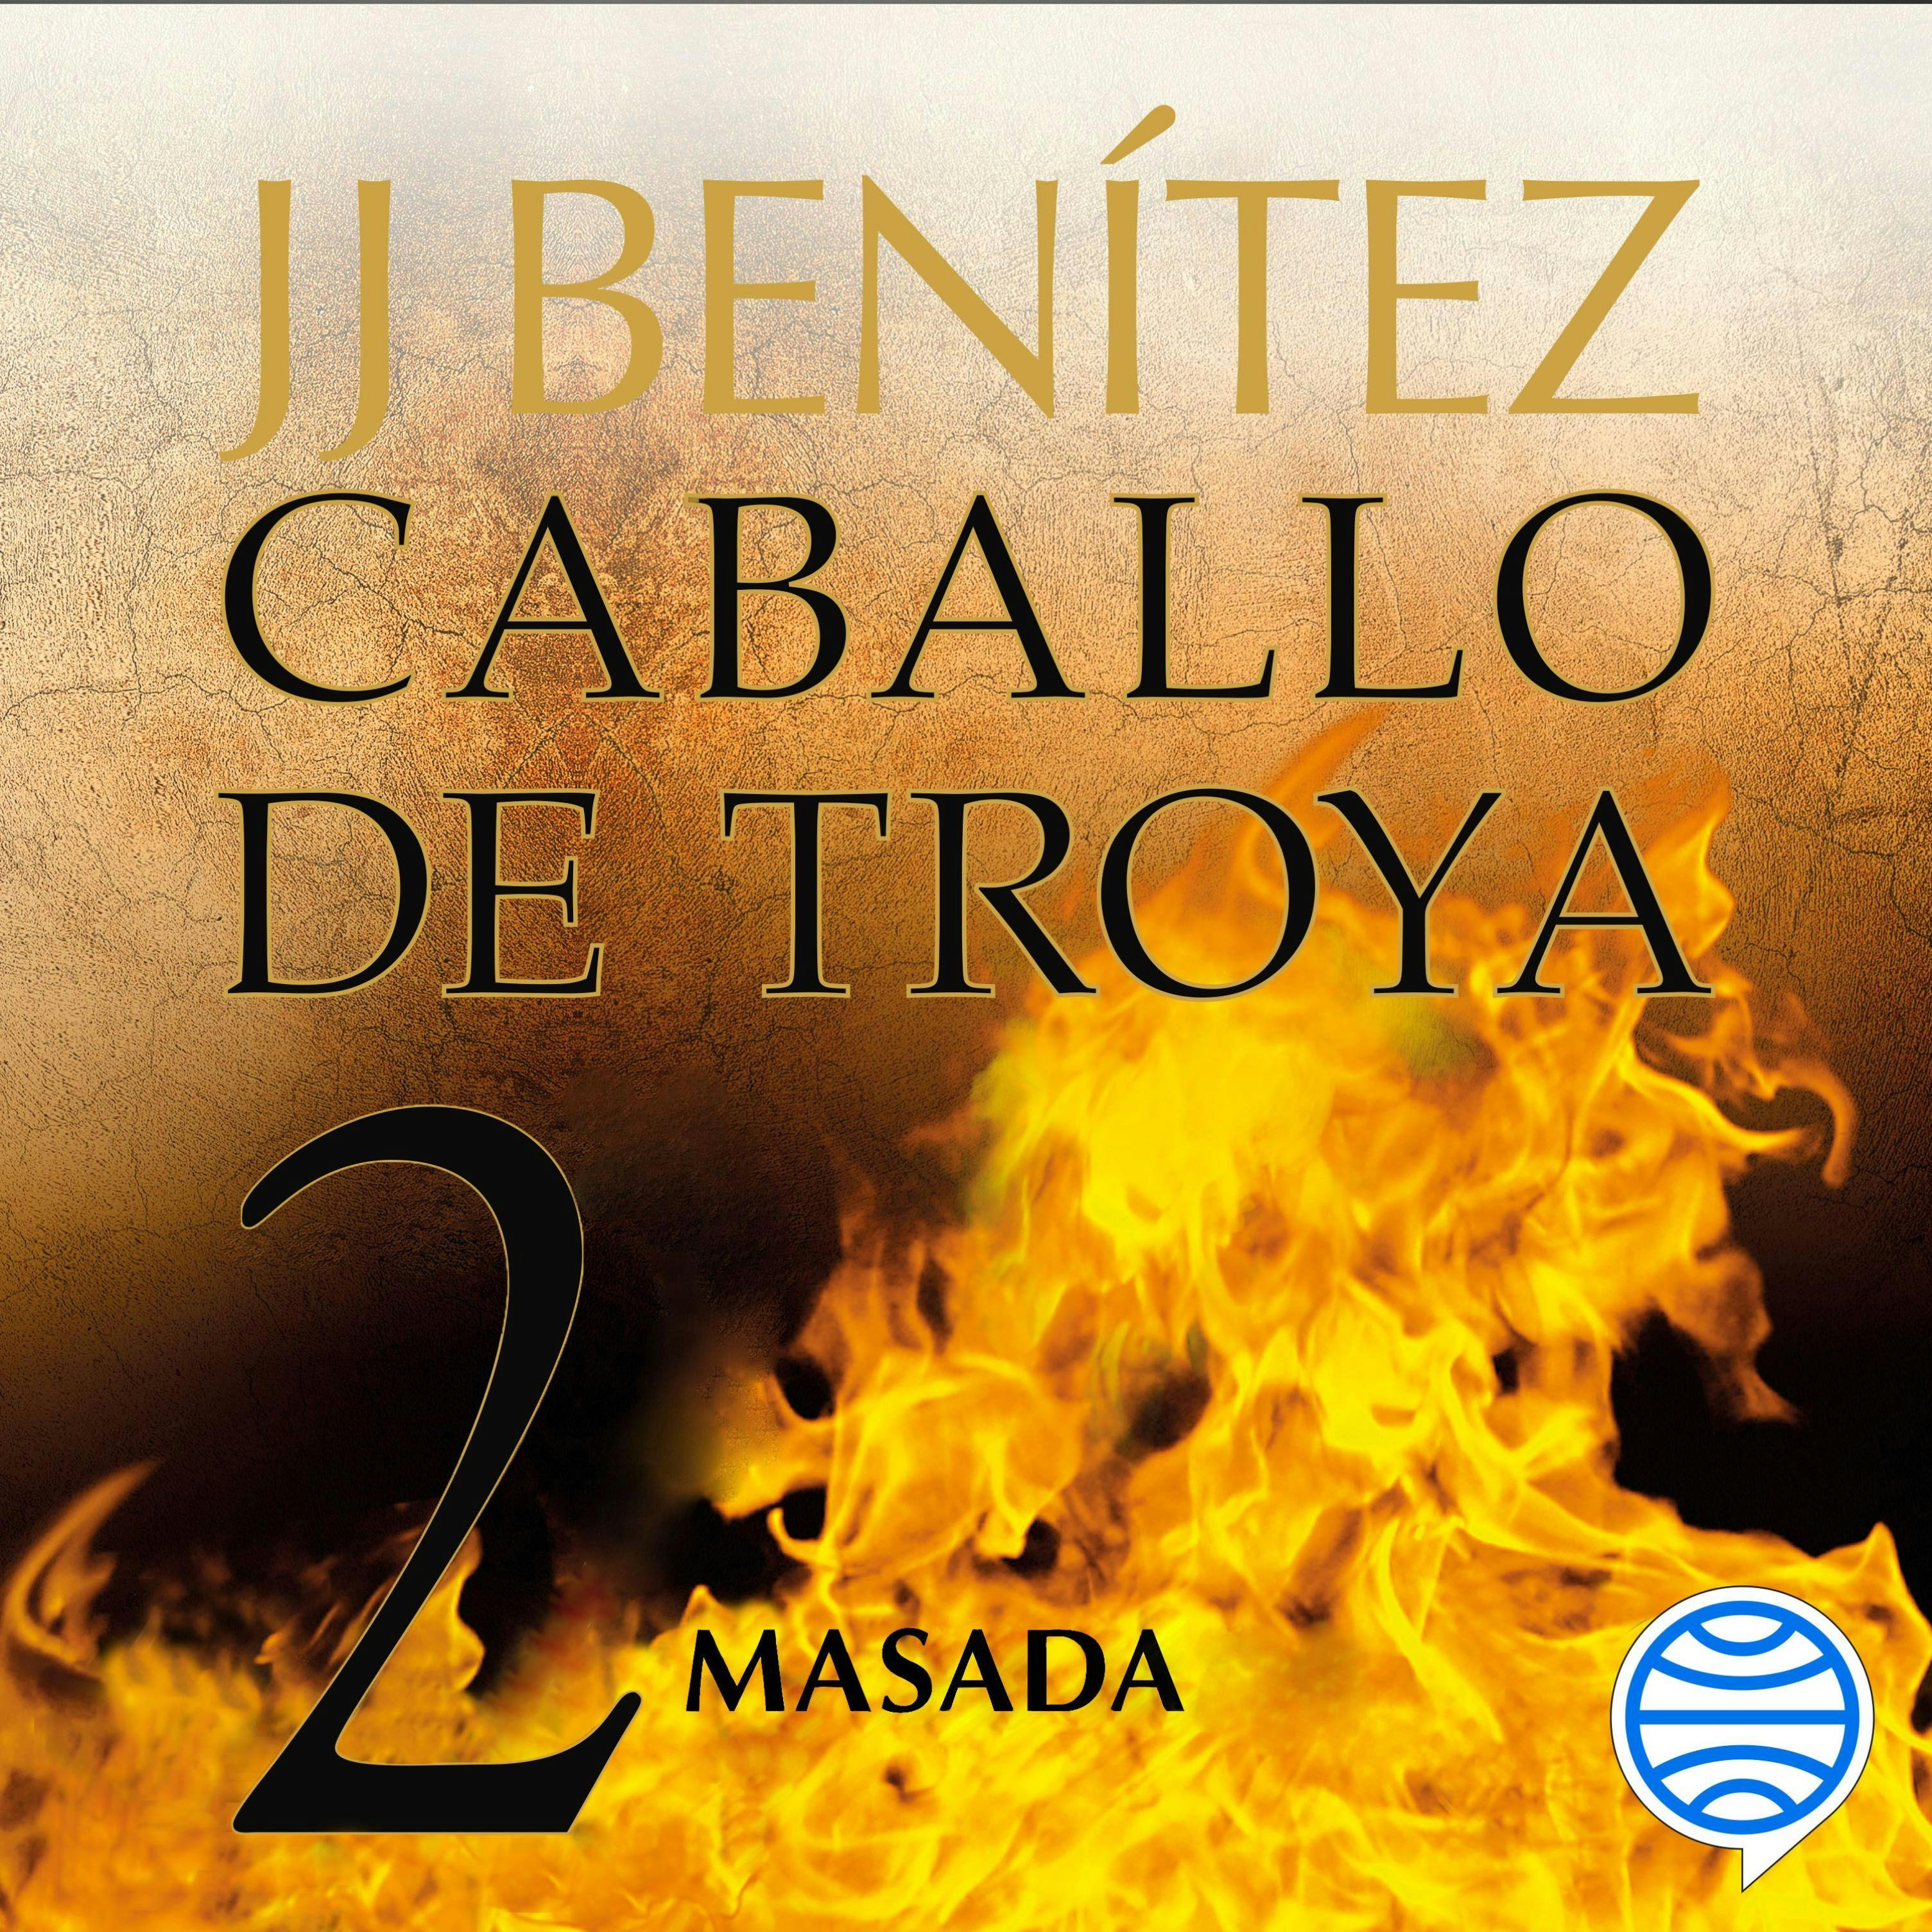 Jj Benitez Caballo De Troya 1 Audiolibro Masada. Caballo de Troya 2 | audiolibro y e-book | J. J. Benítez | Nextory